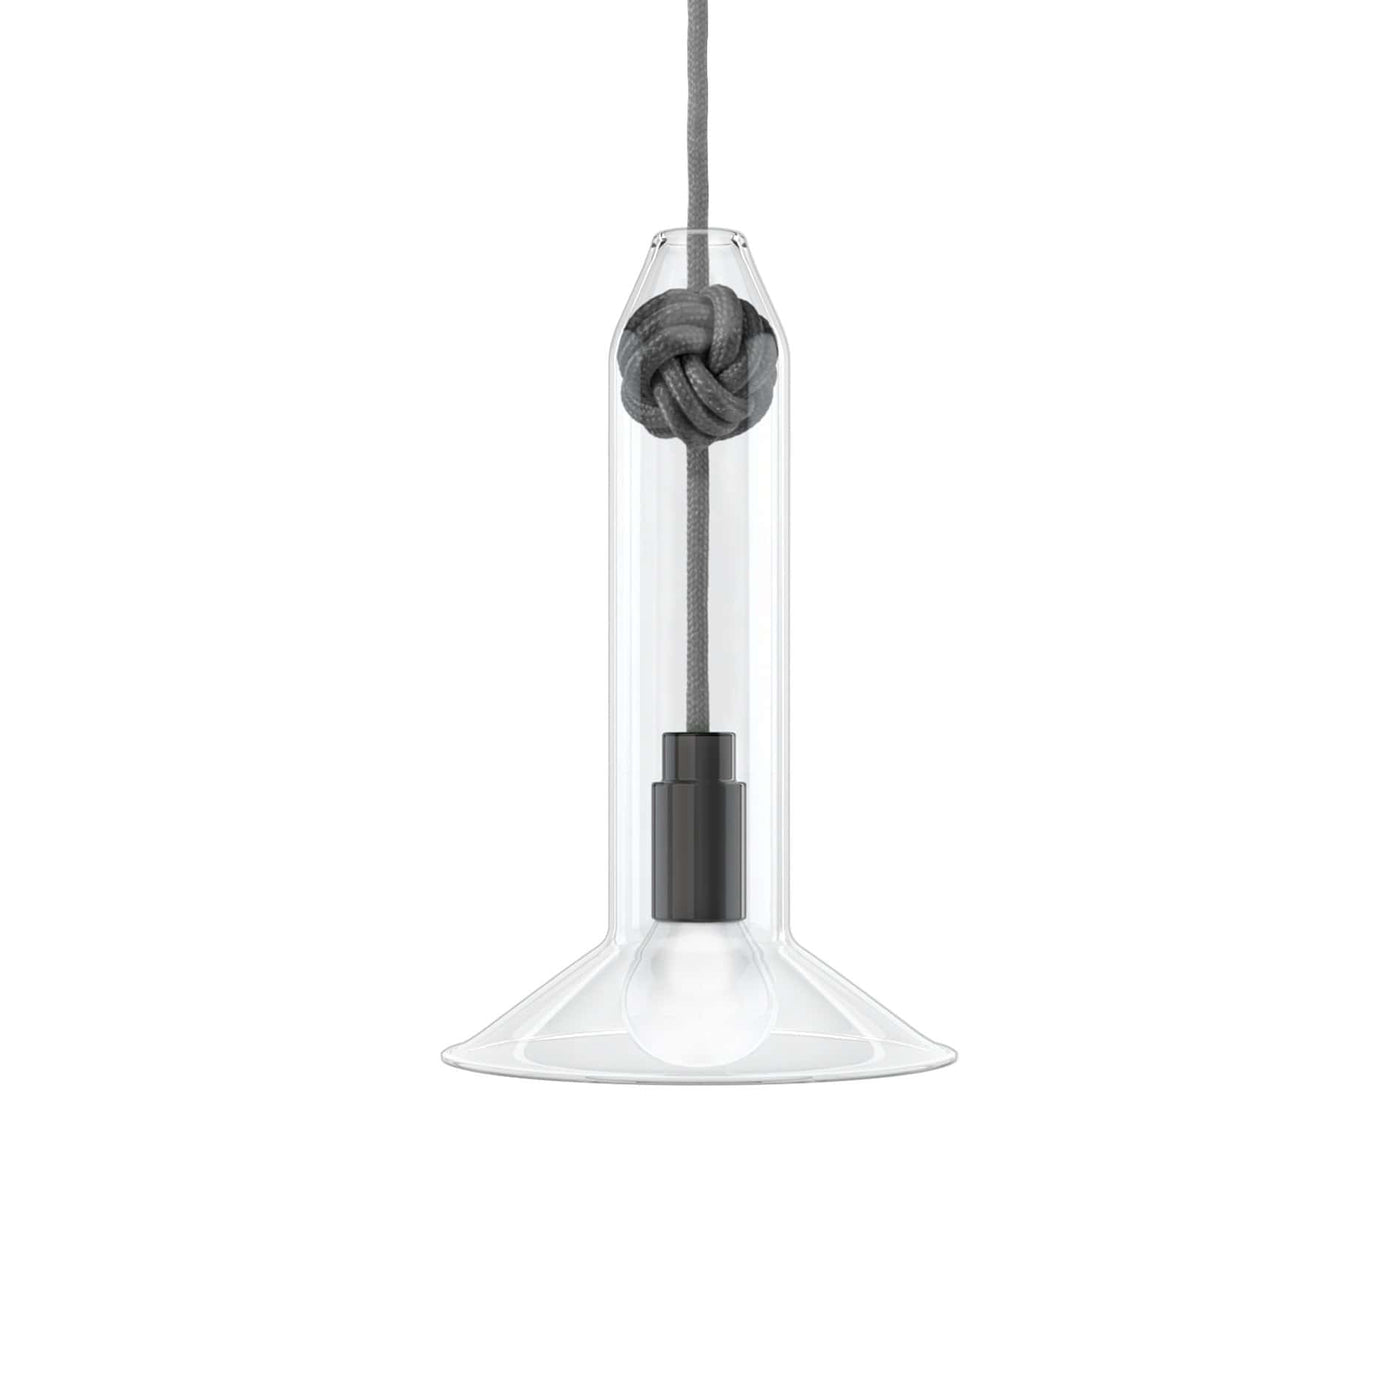 Vitamin Small Knot Pendant Lamp in grey. Buy now from someday designs. Vitamin small Knot Lamp ceiling pendant. Shop online at someday designs. #colour_grey